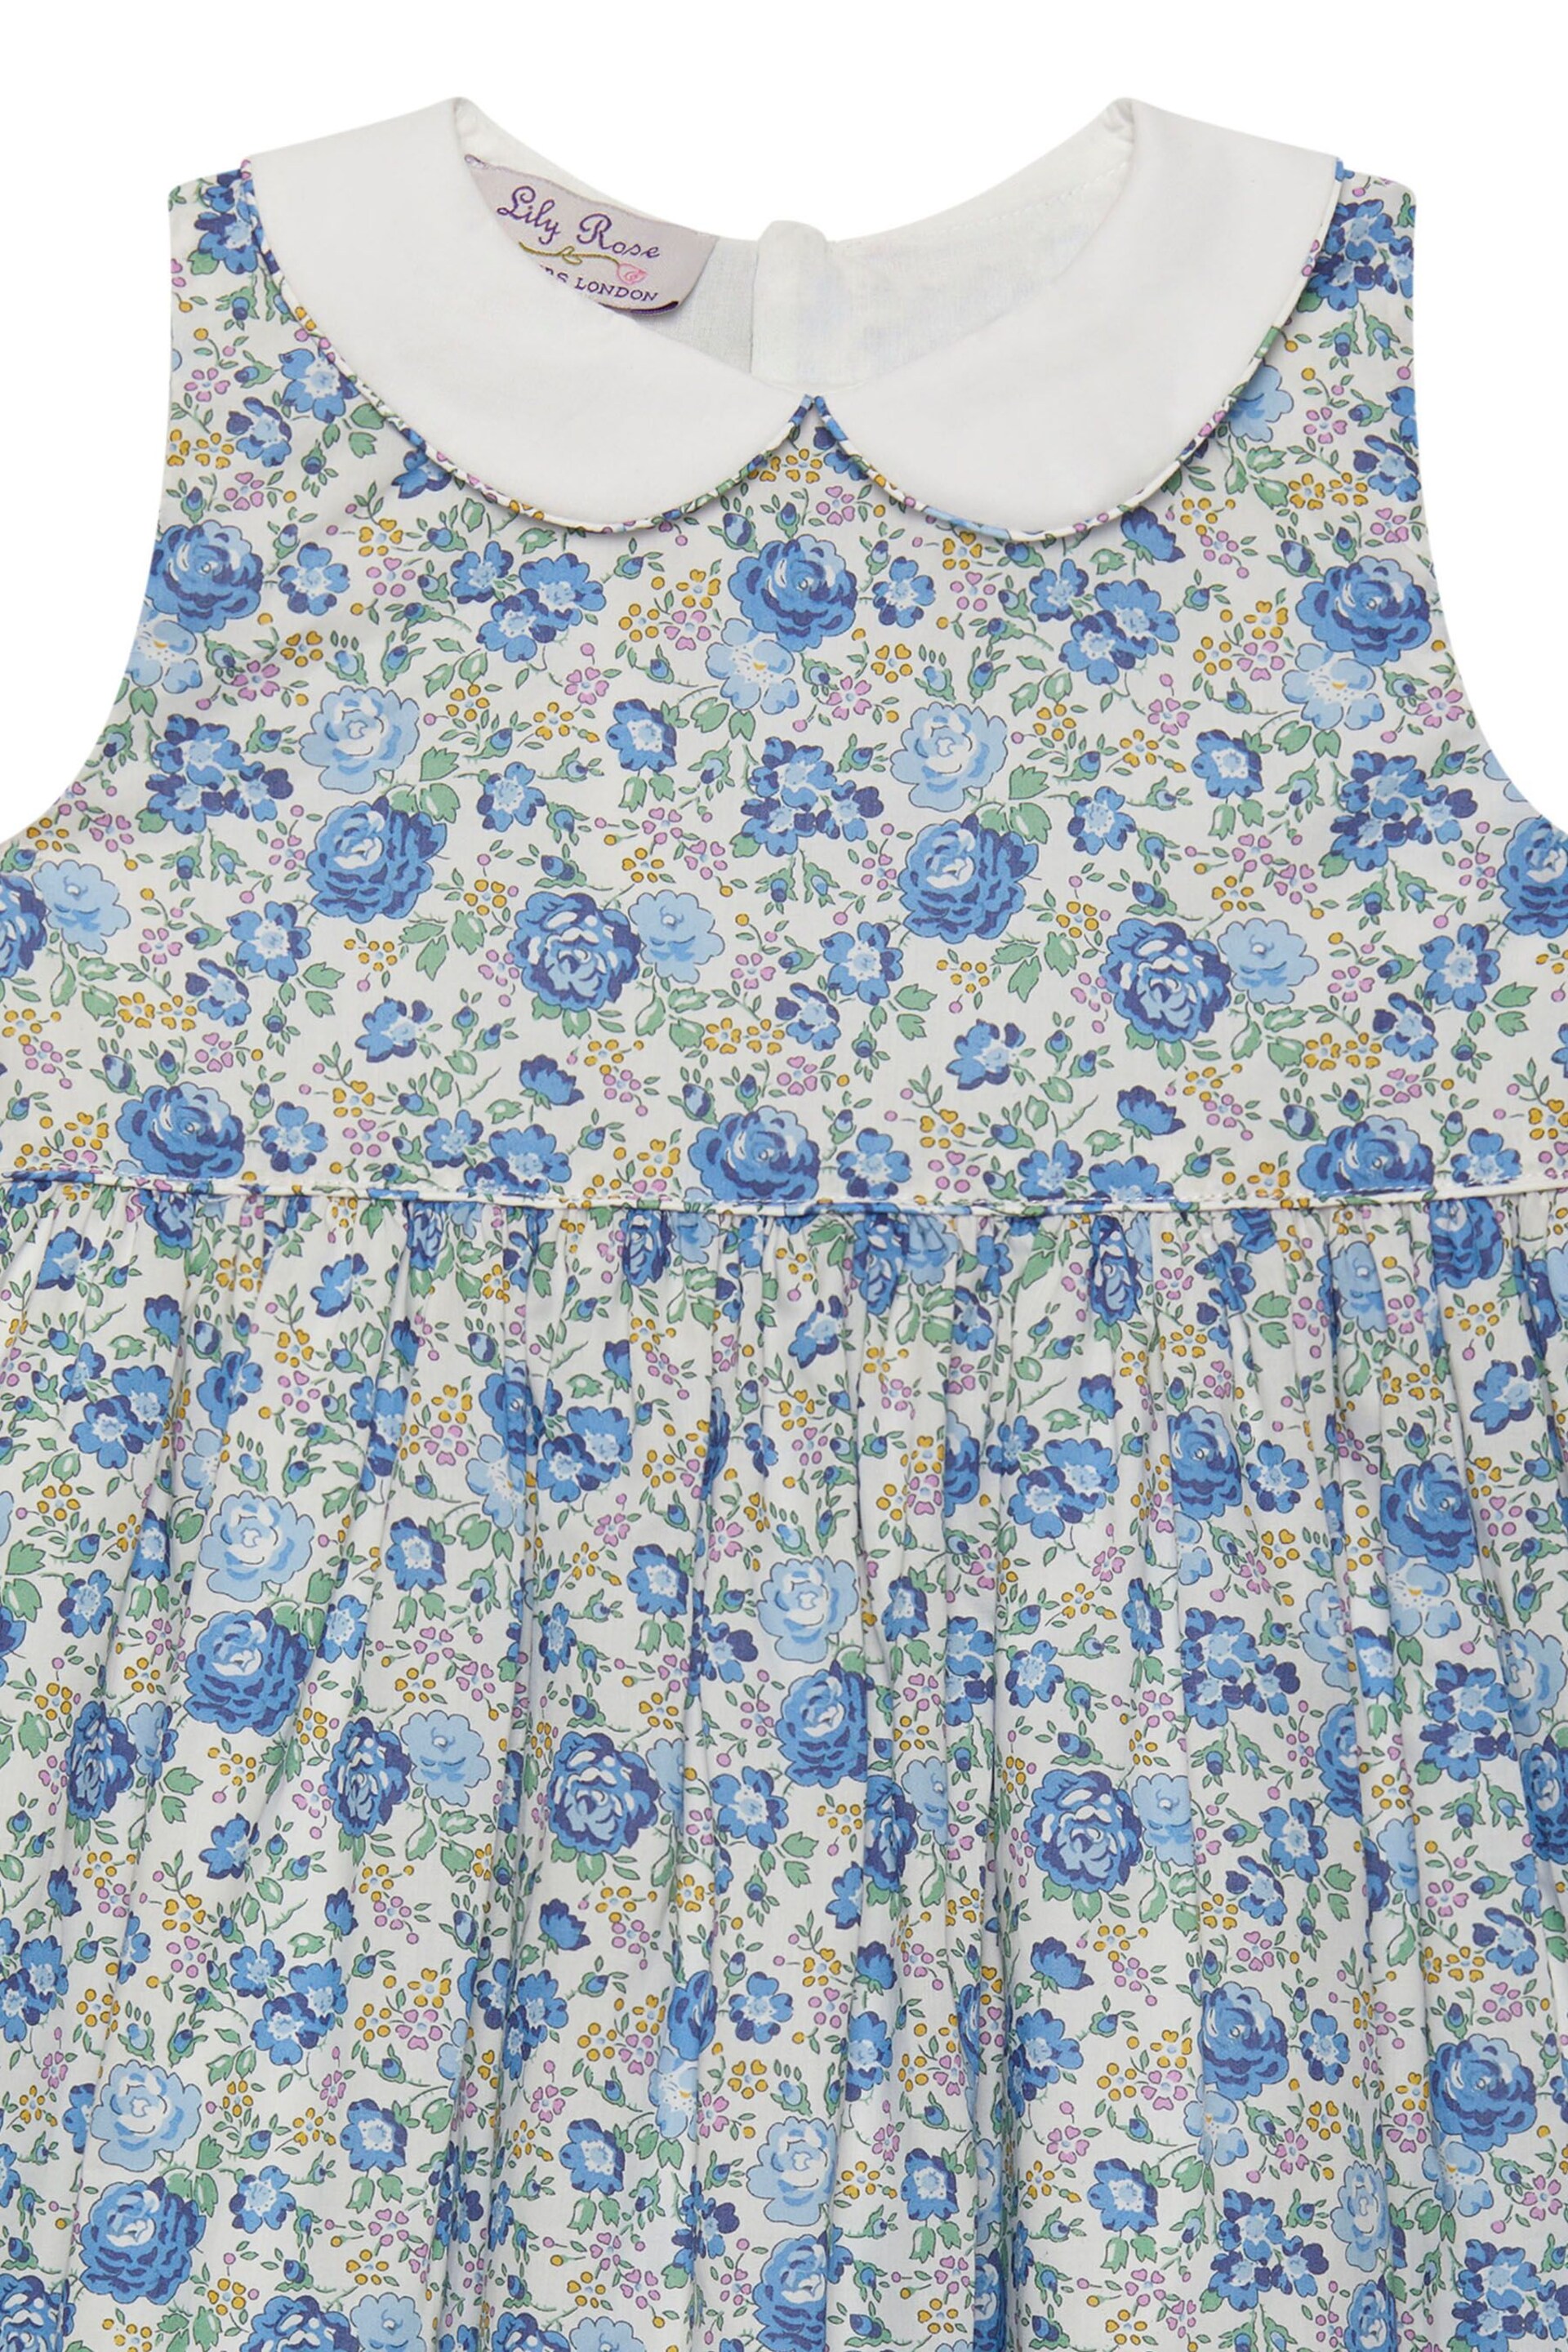 Trotters London Liberty Print Blue Felicite Cotton Dress - Image 3 of 3